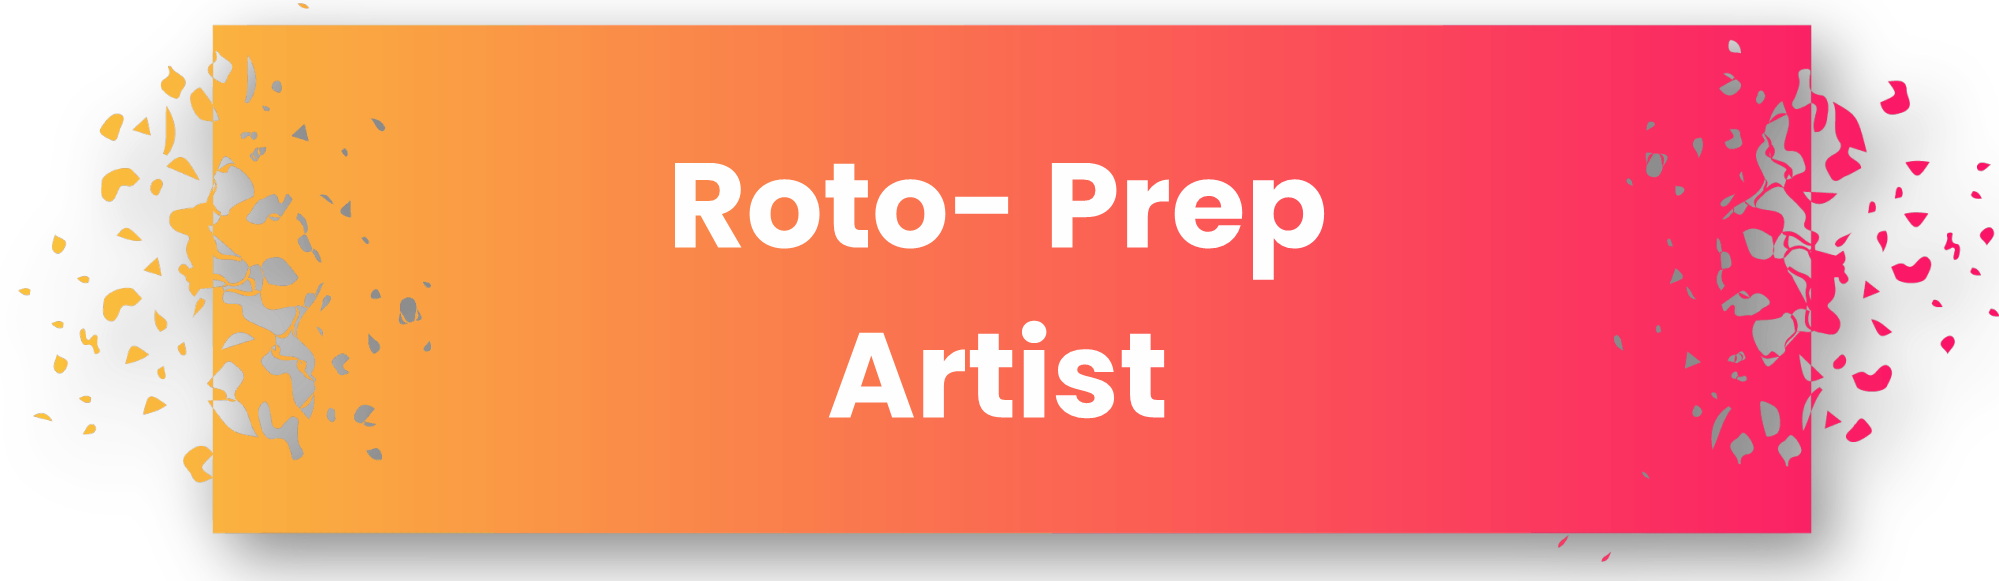 Roto- Prep